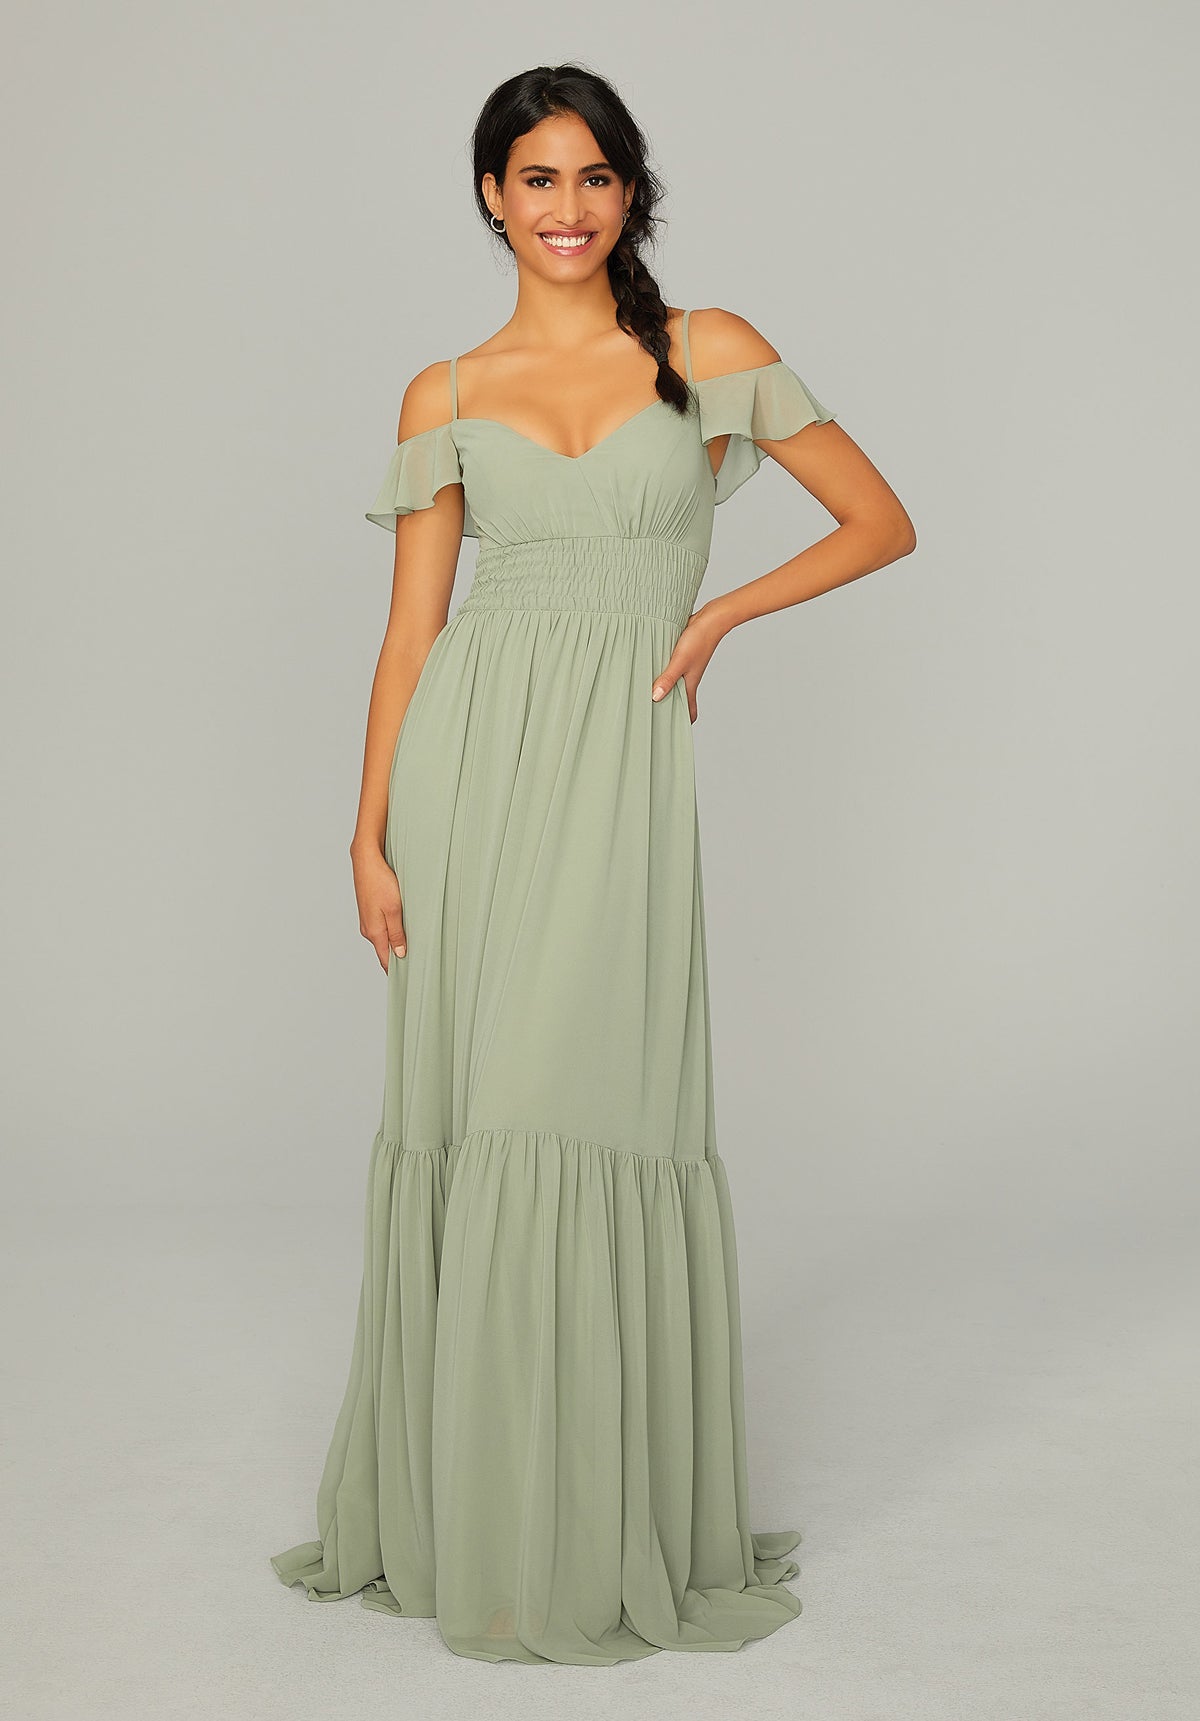 Morilee Bridesmaids Dress - 21792 Chiffon Bridesmaid Dress with